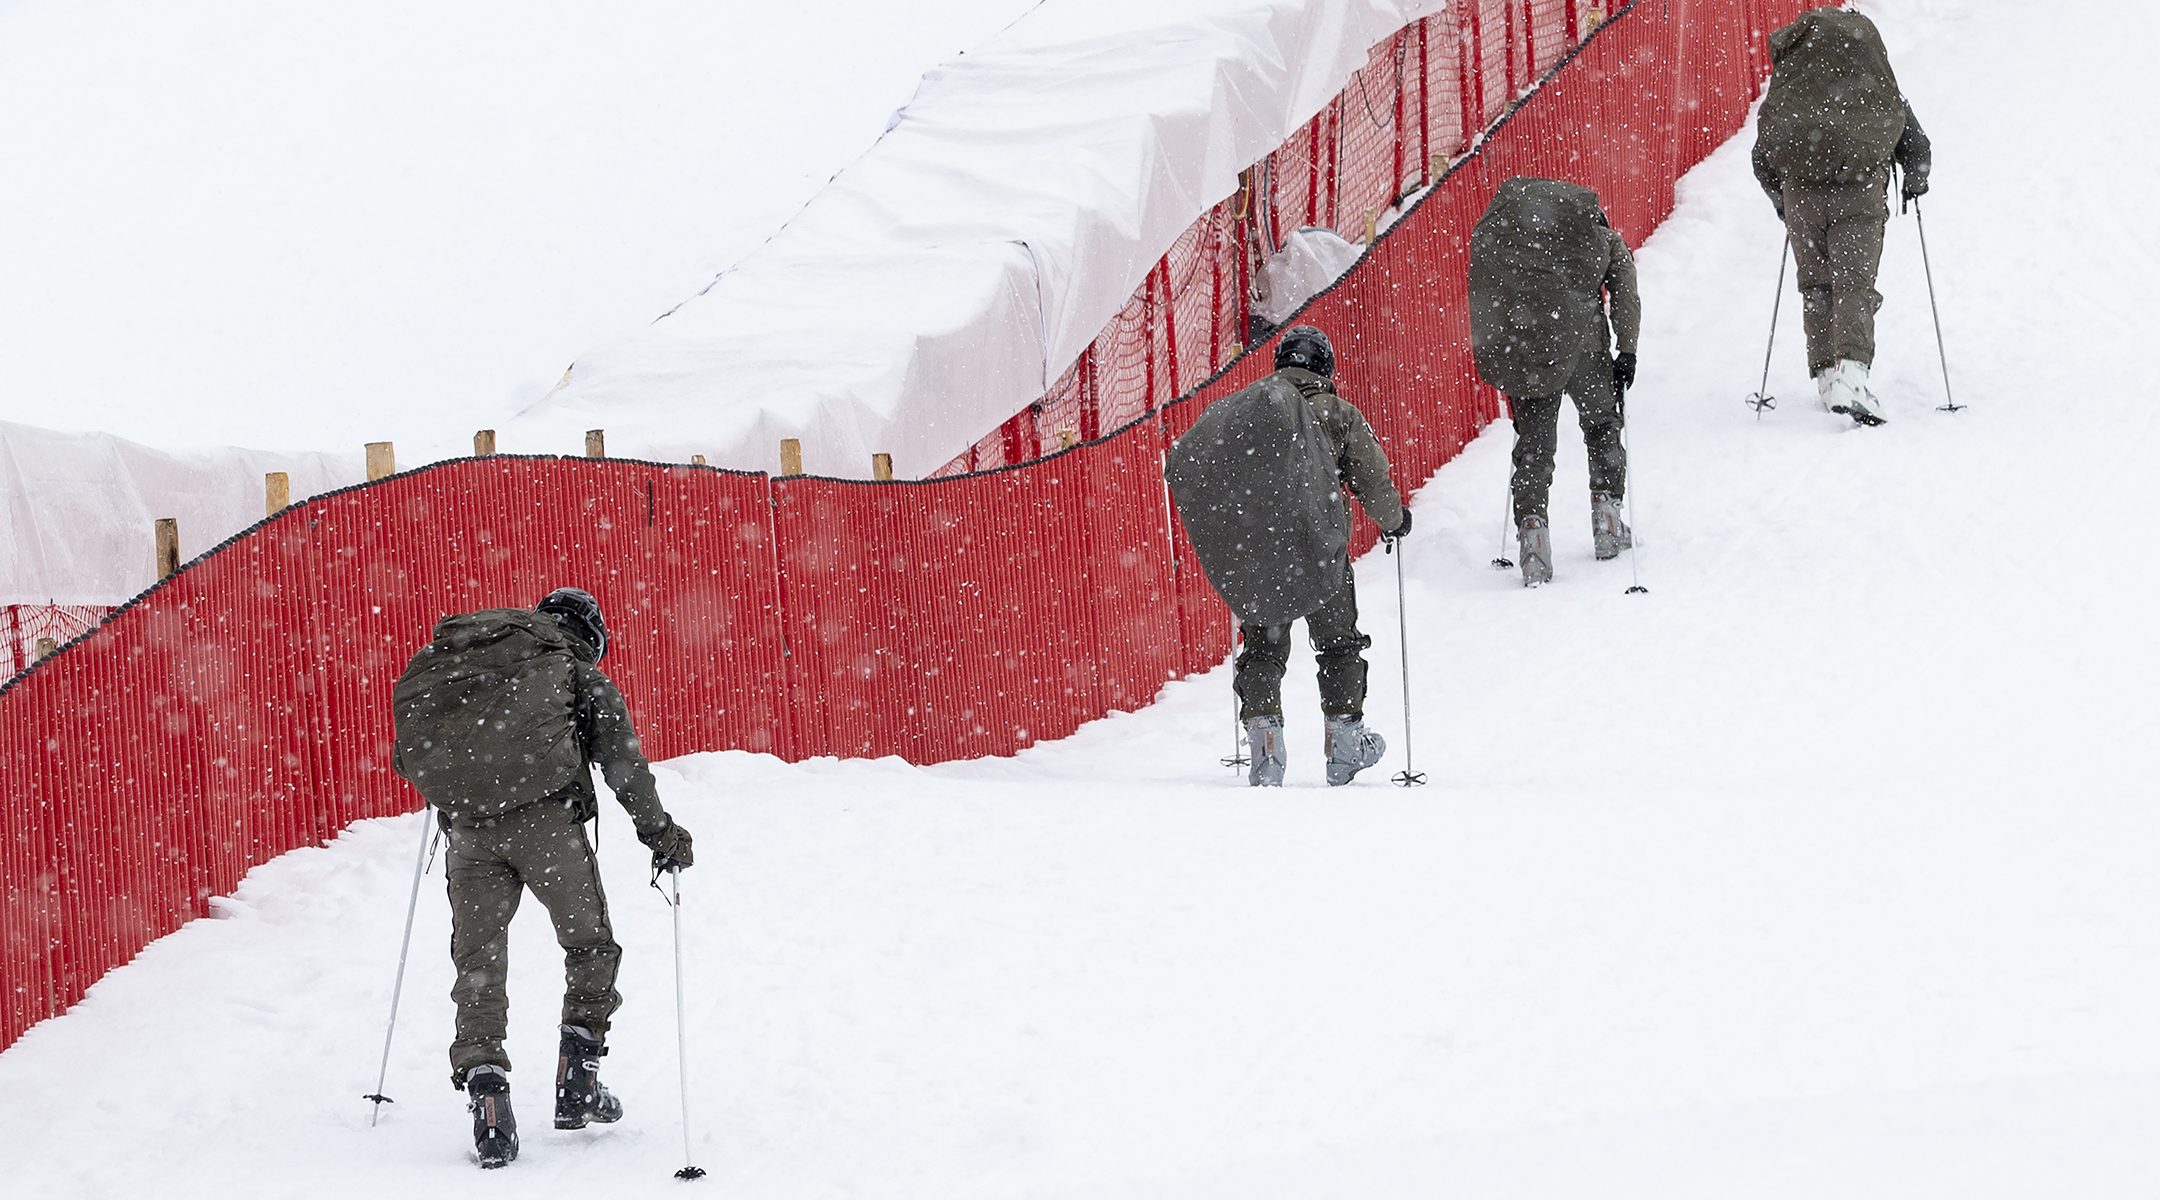 Soldiers train in Kitzbuehel, Austria on January 23, 2021. (Joe Klamar/AFP via Getty Images)